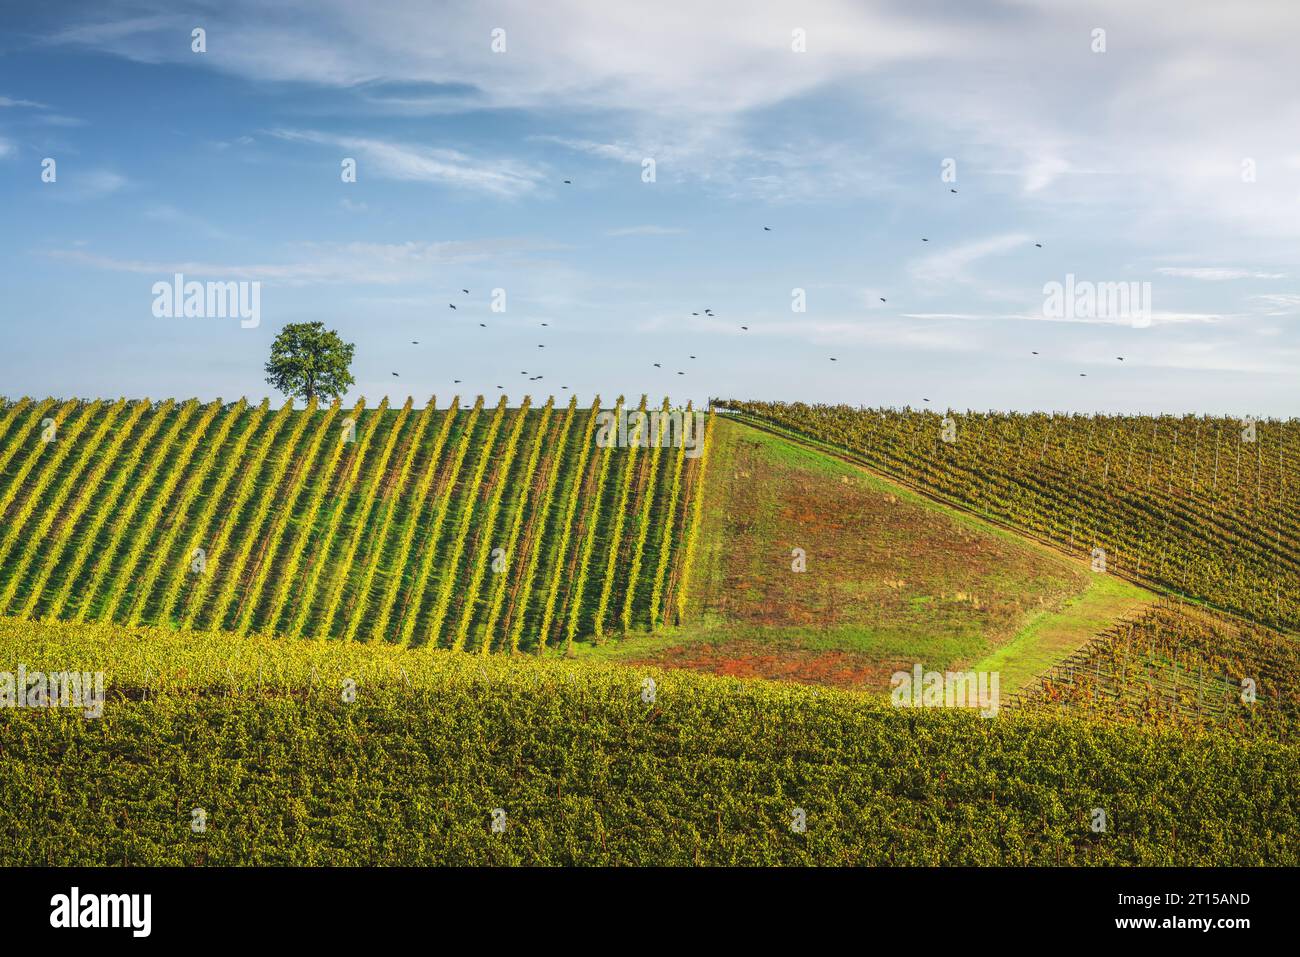 Vineyards, a tree, and a group of birds in flight. Castellina in Chianti, Tuscany region, Italy, Europe. Stock Photo